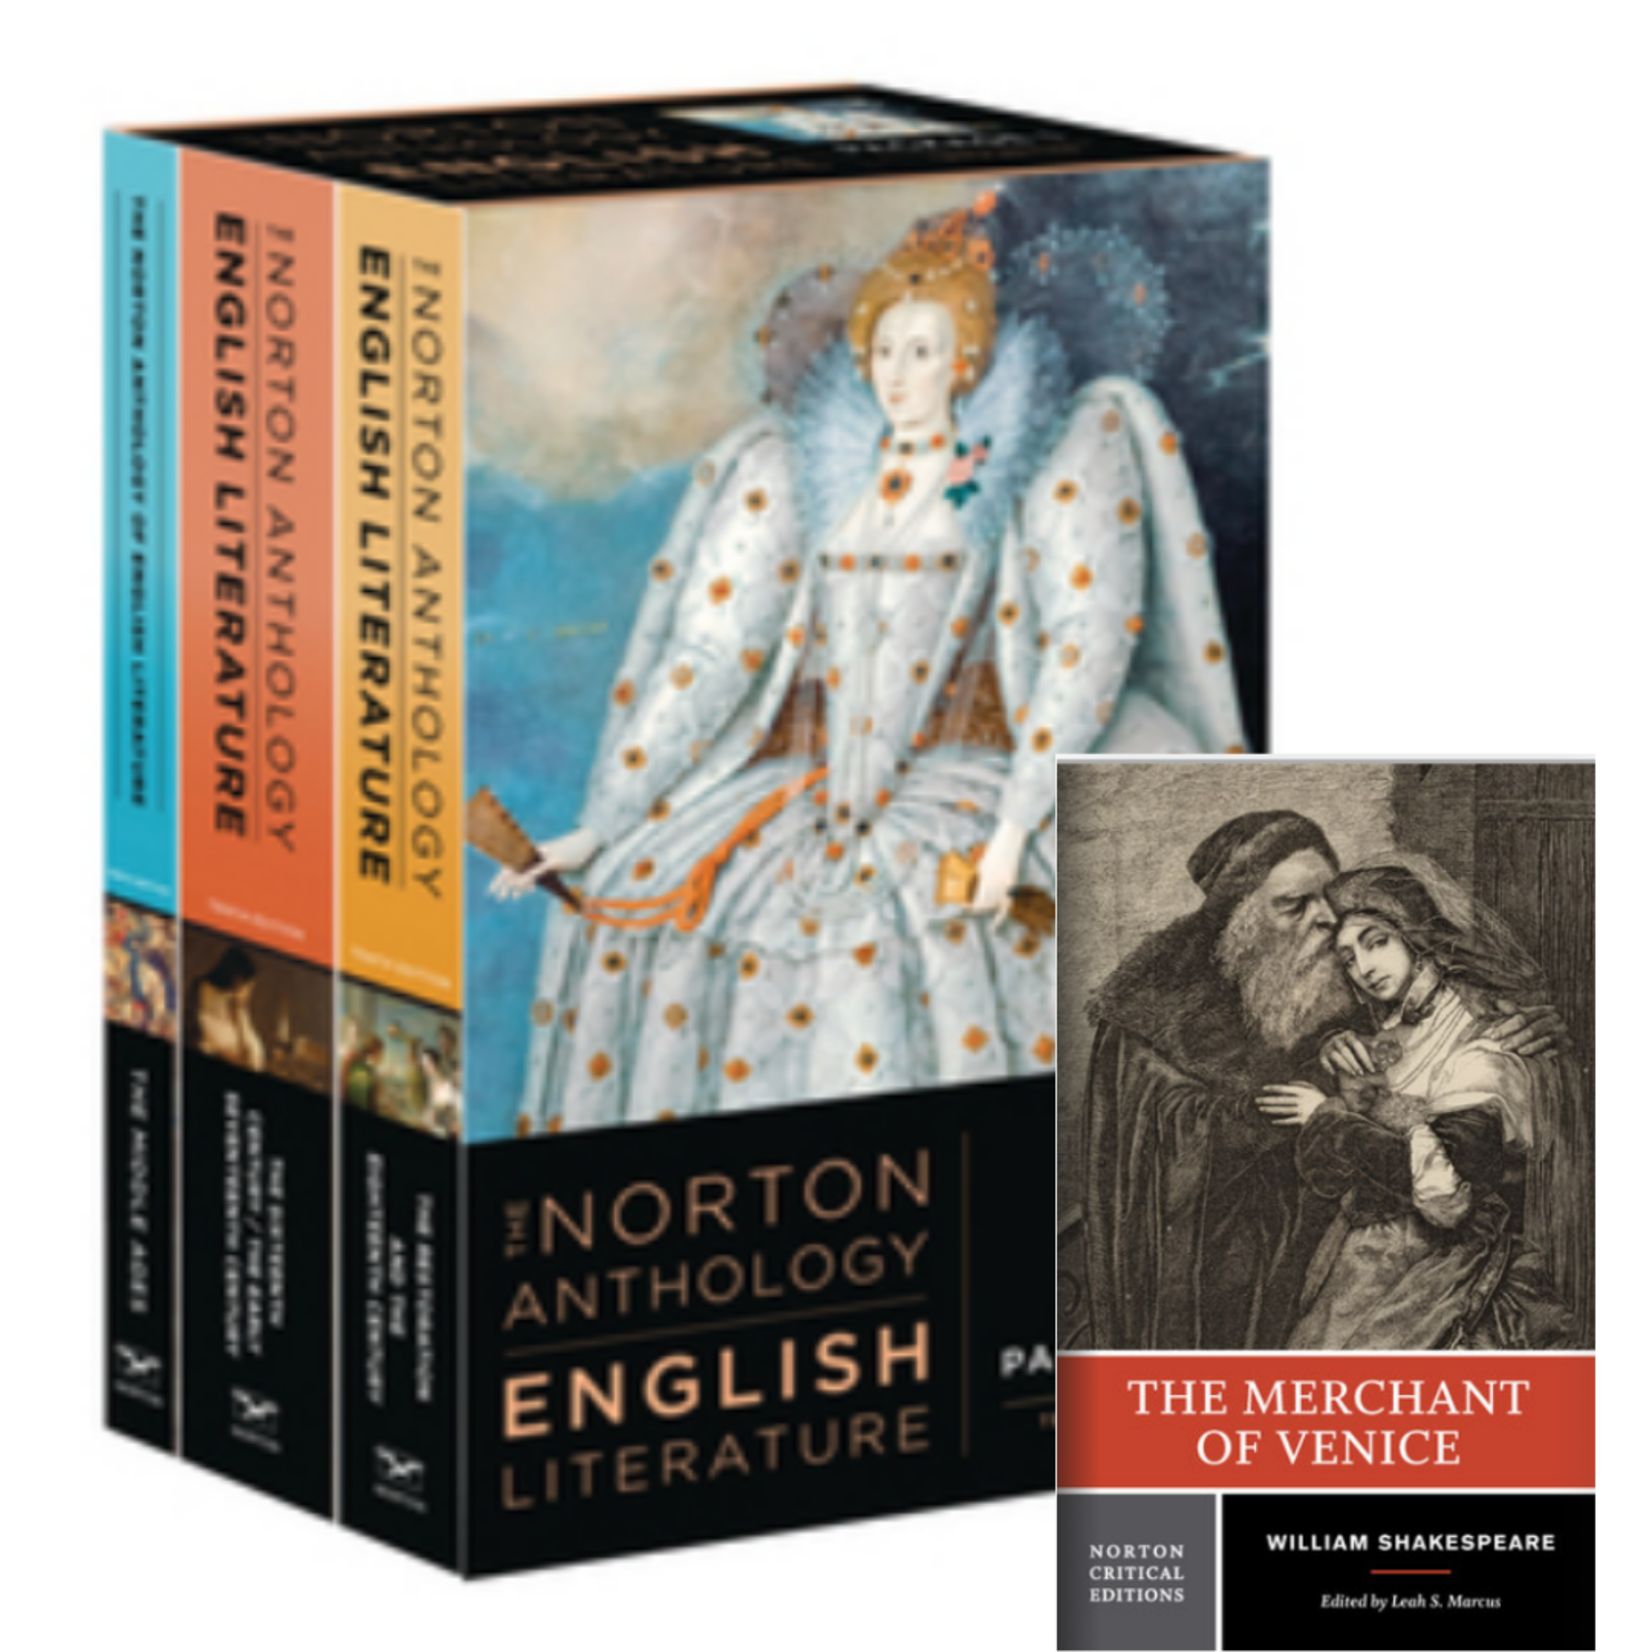 Norton Anthology of English Literature Vol ABC Merchant Venice